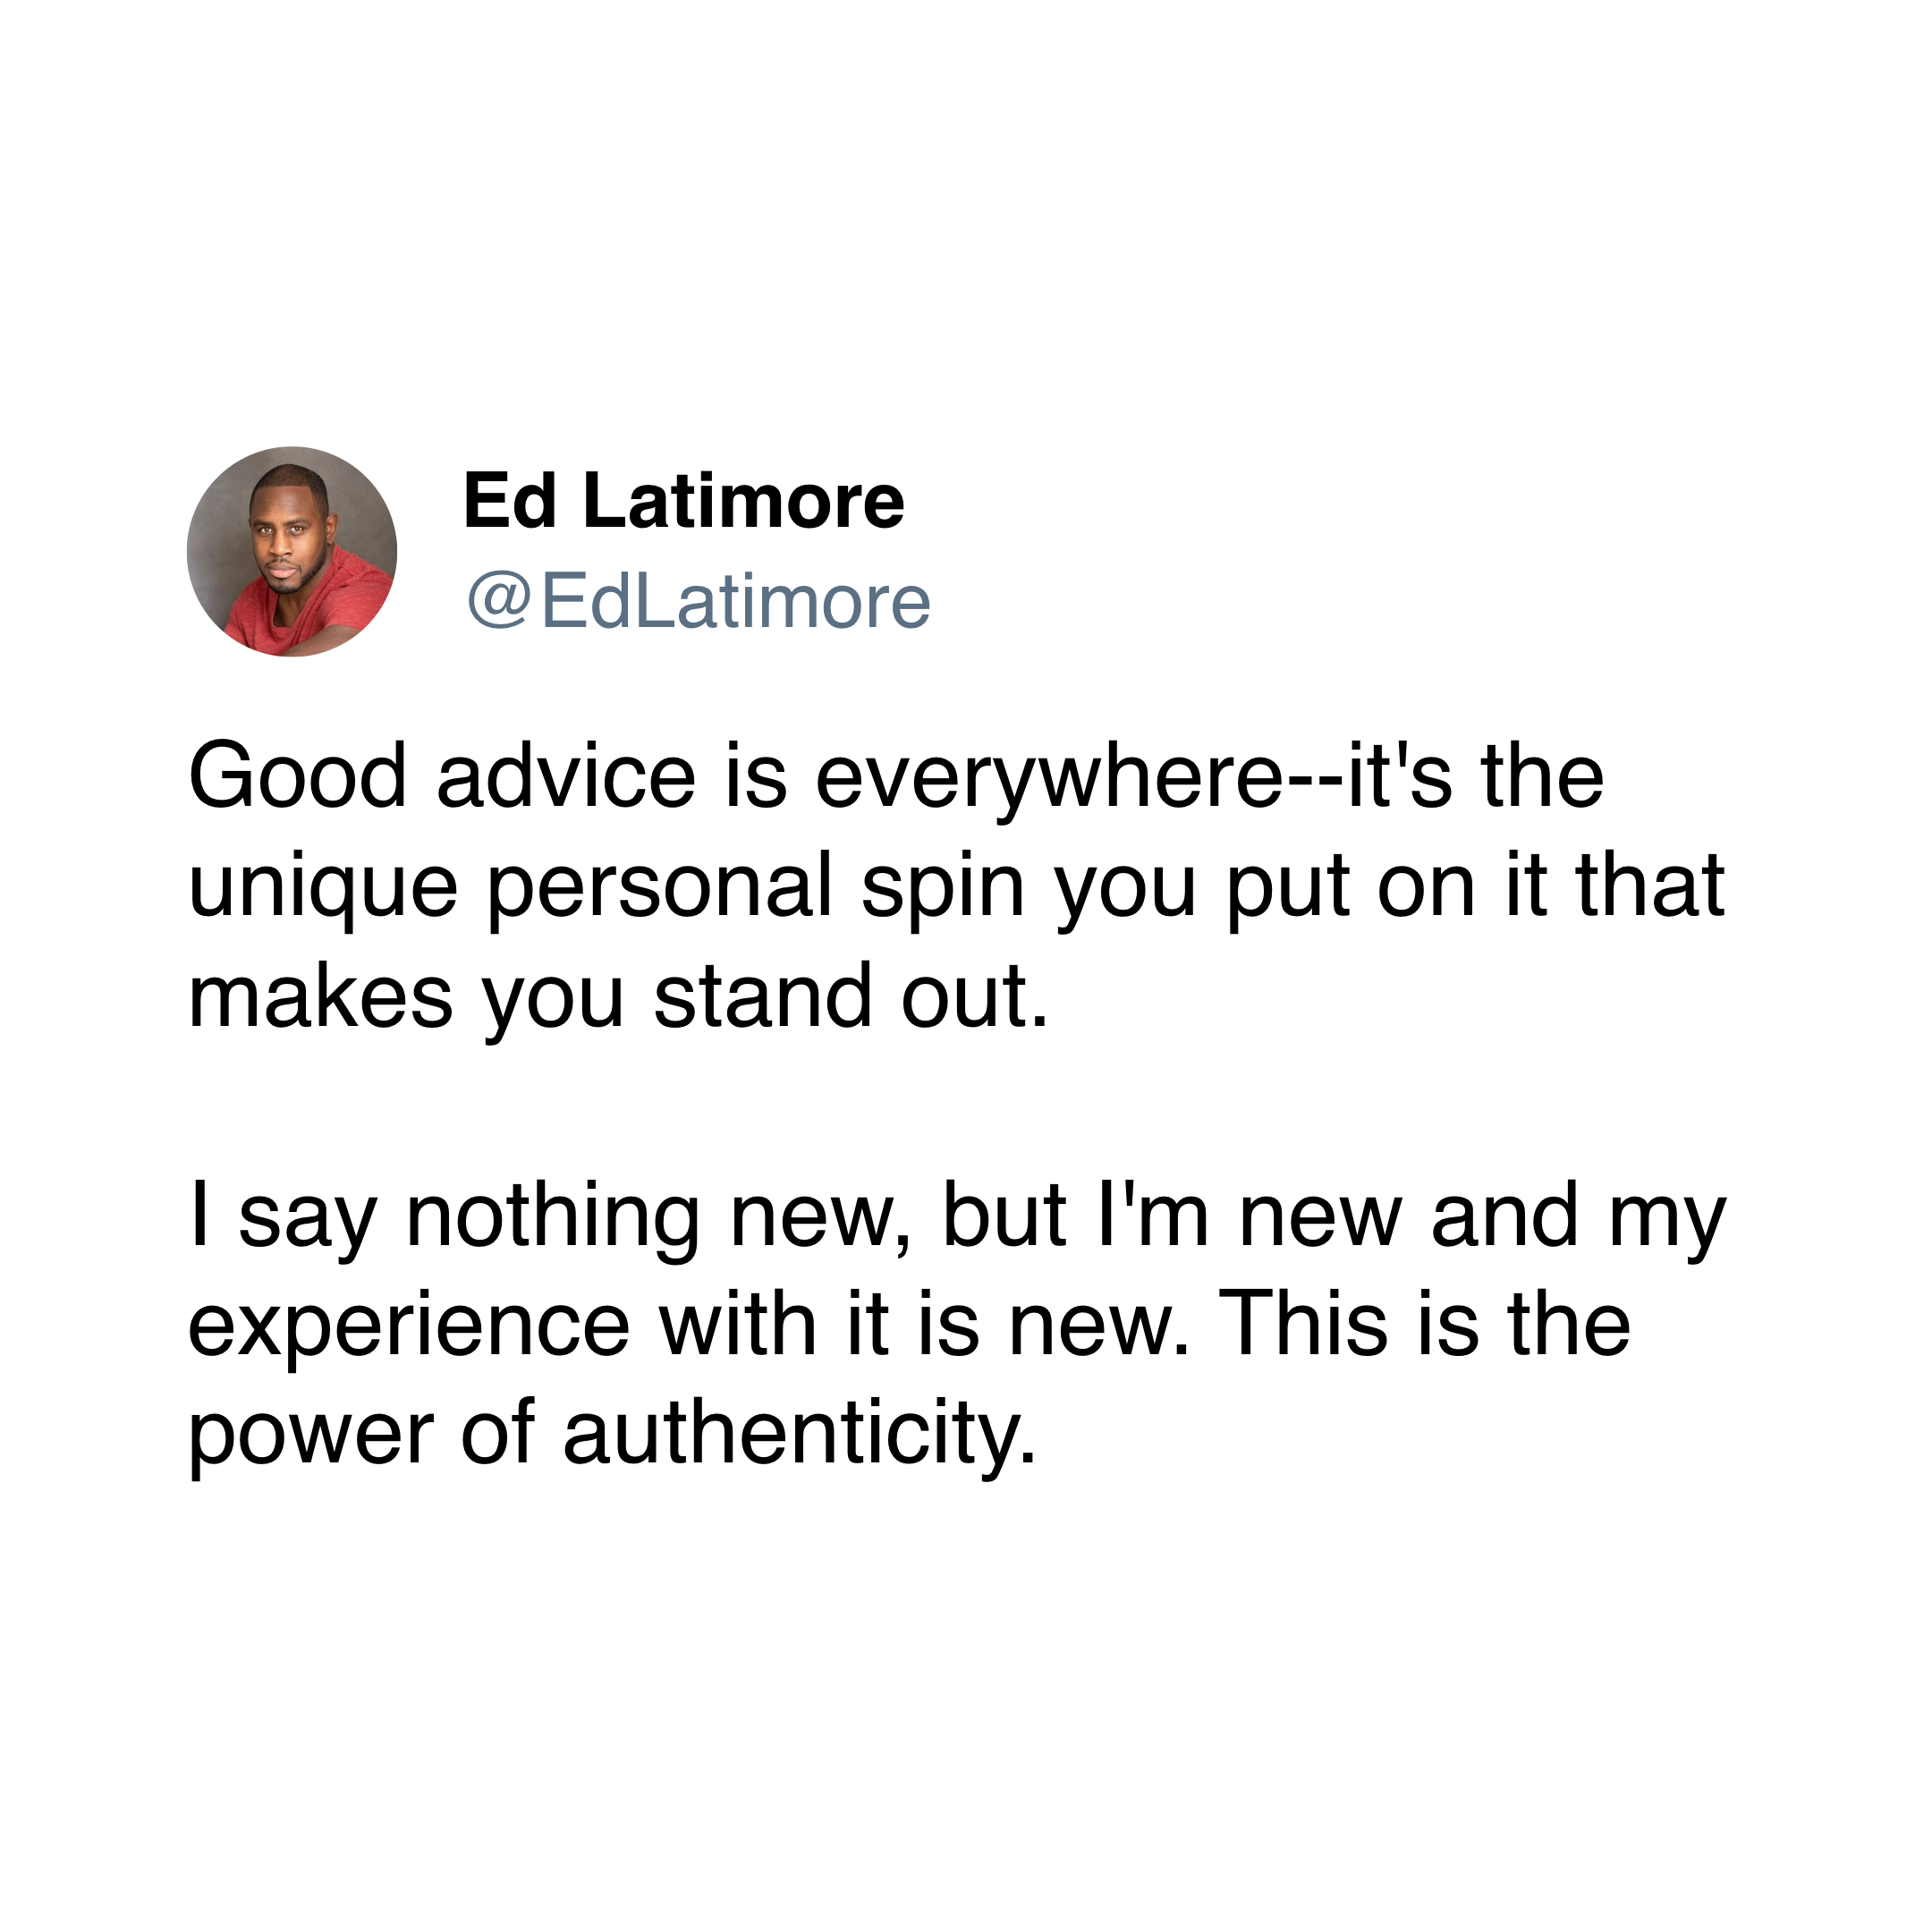 ed latimore authenticity quote "authenticity makes good advice better"